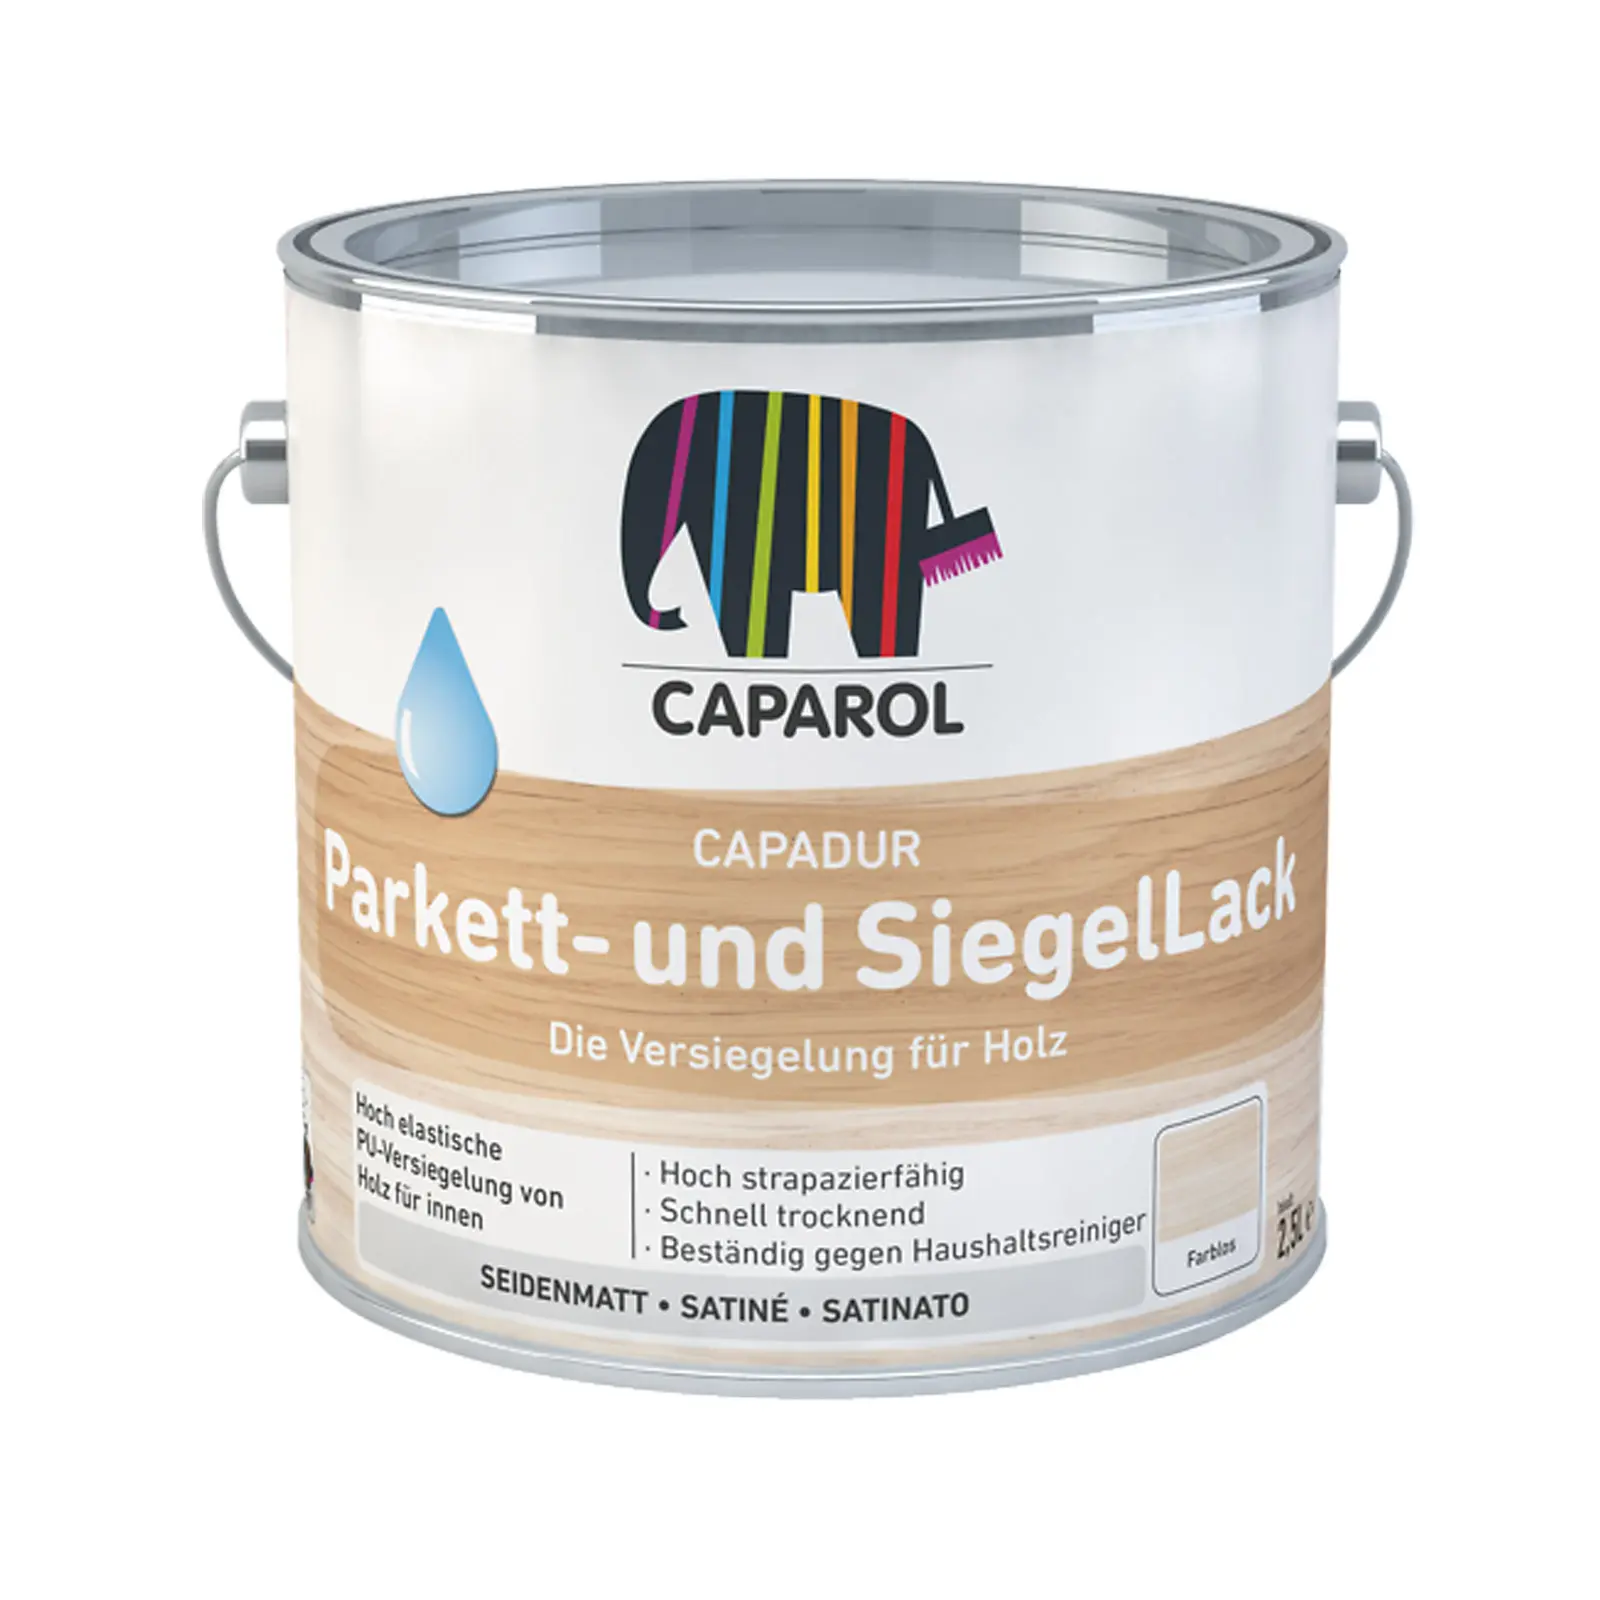 Caparol Capadur Parkett- und Siegellack, seidenmatt, 750ml